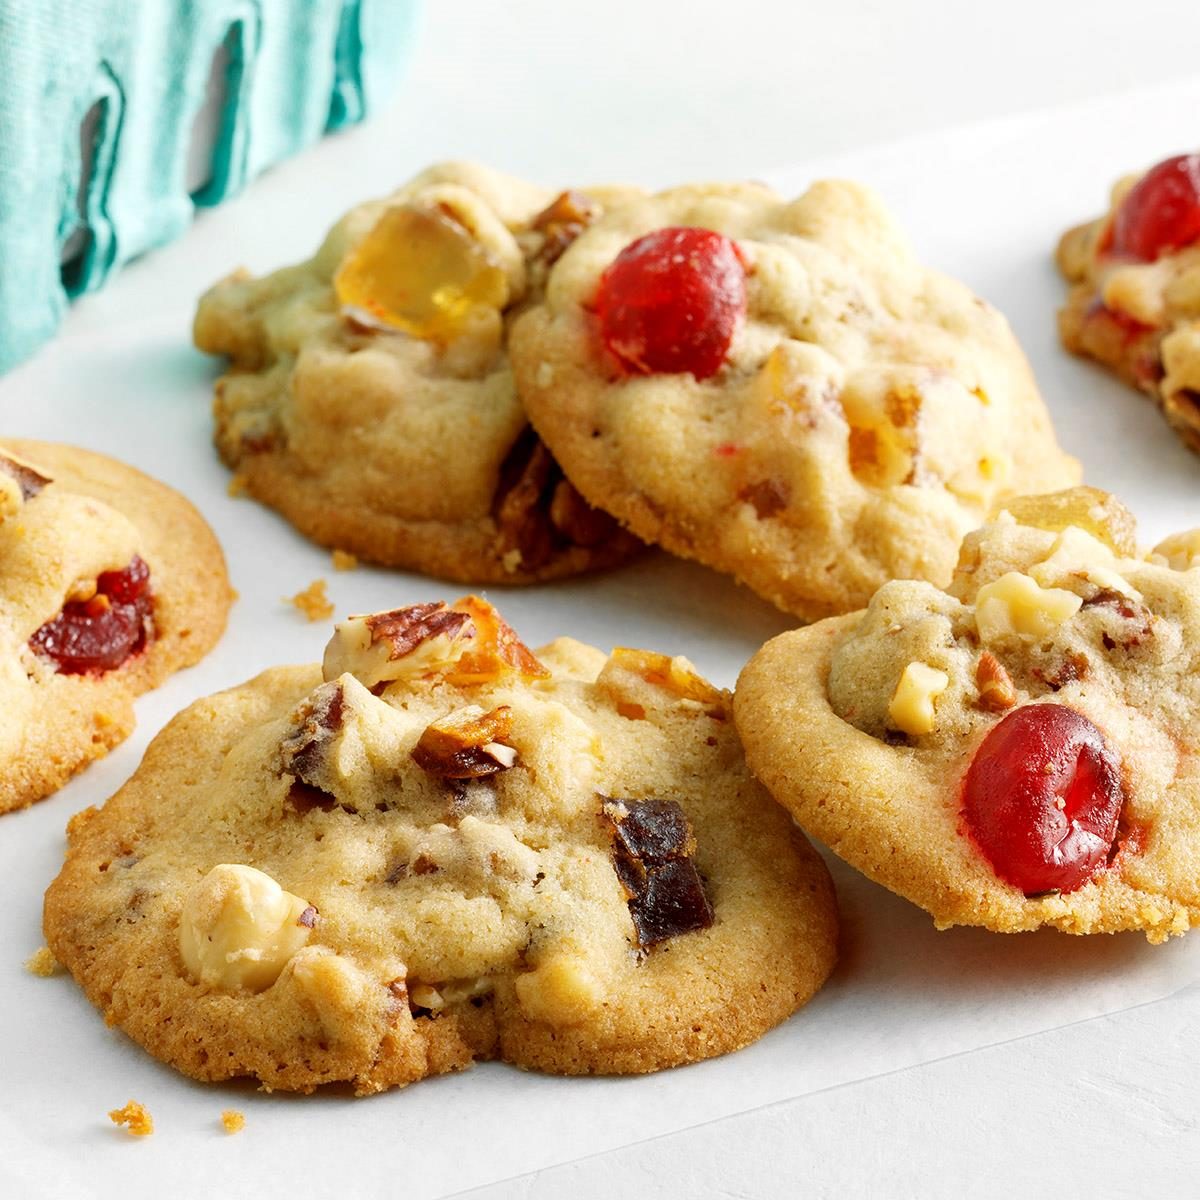 https://www.tasteofhome.com/wp-content/uploads/2018/01/Fruitcake-Christmas-Cookies_EXPS_HCBZ22_6158_DR_05_24_2b.jpg